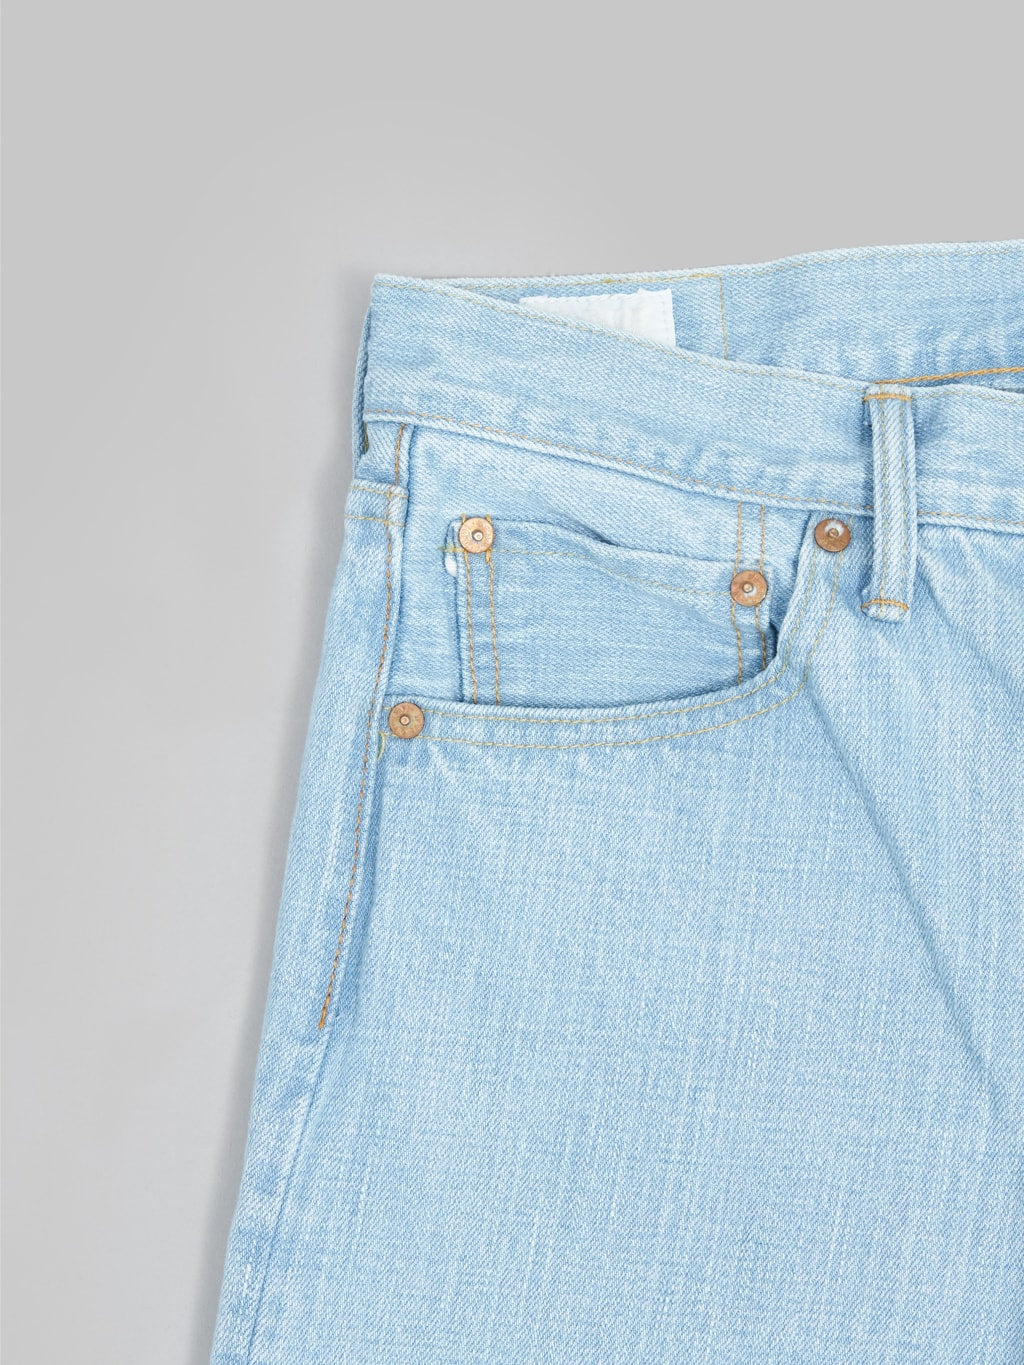 redcast heritage x oni denim kerama blue 15oz selvedge jeans coin pocket